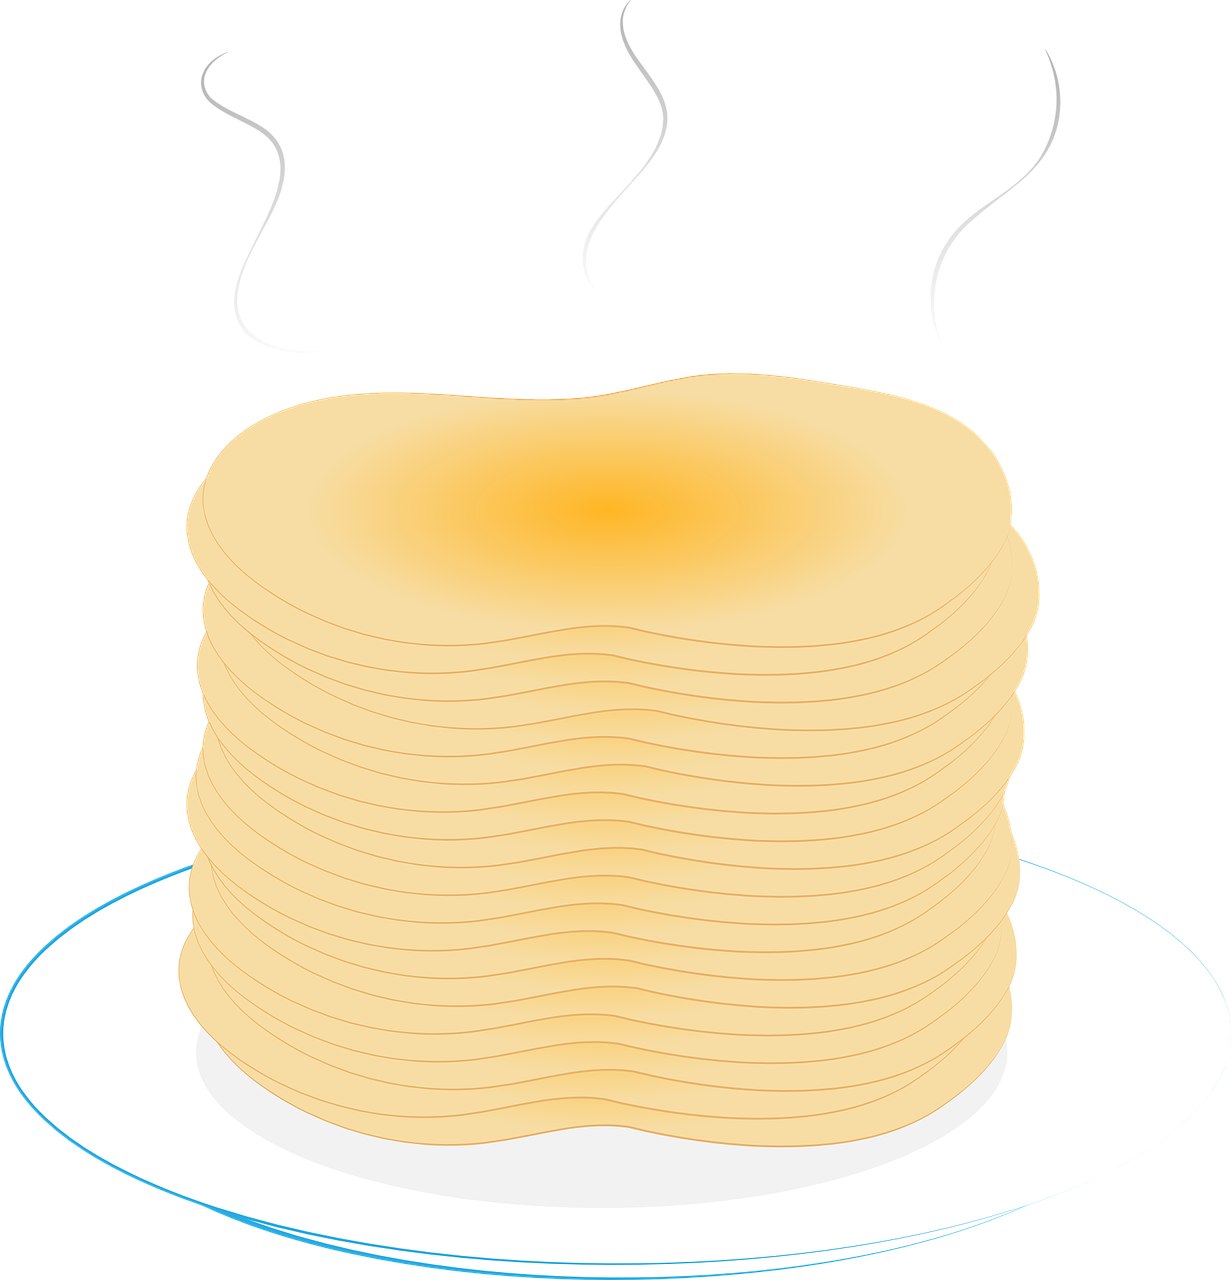 Nalesniki (polish Pancakes)